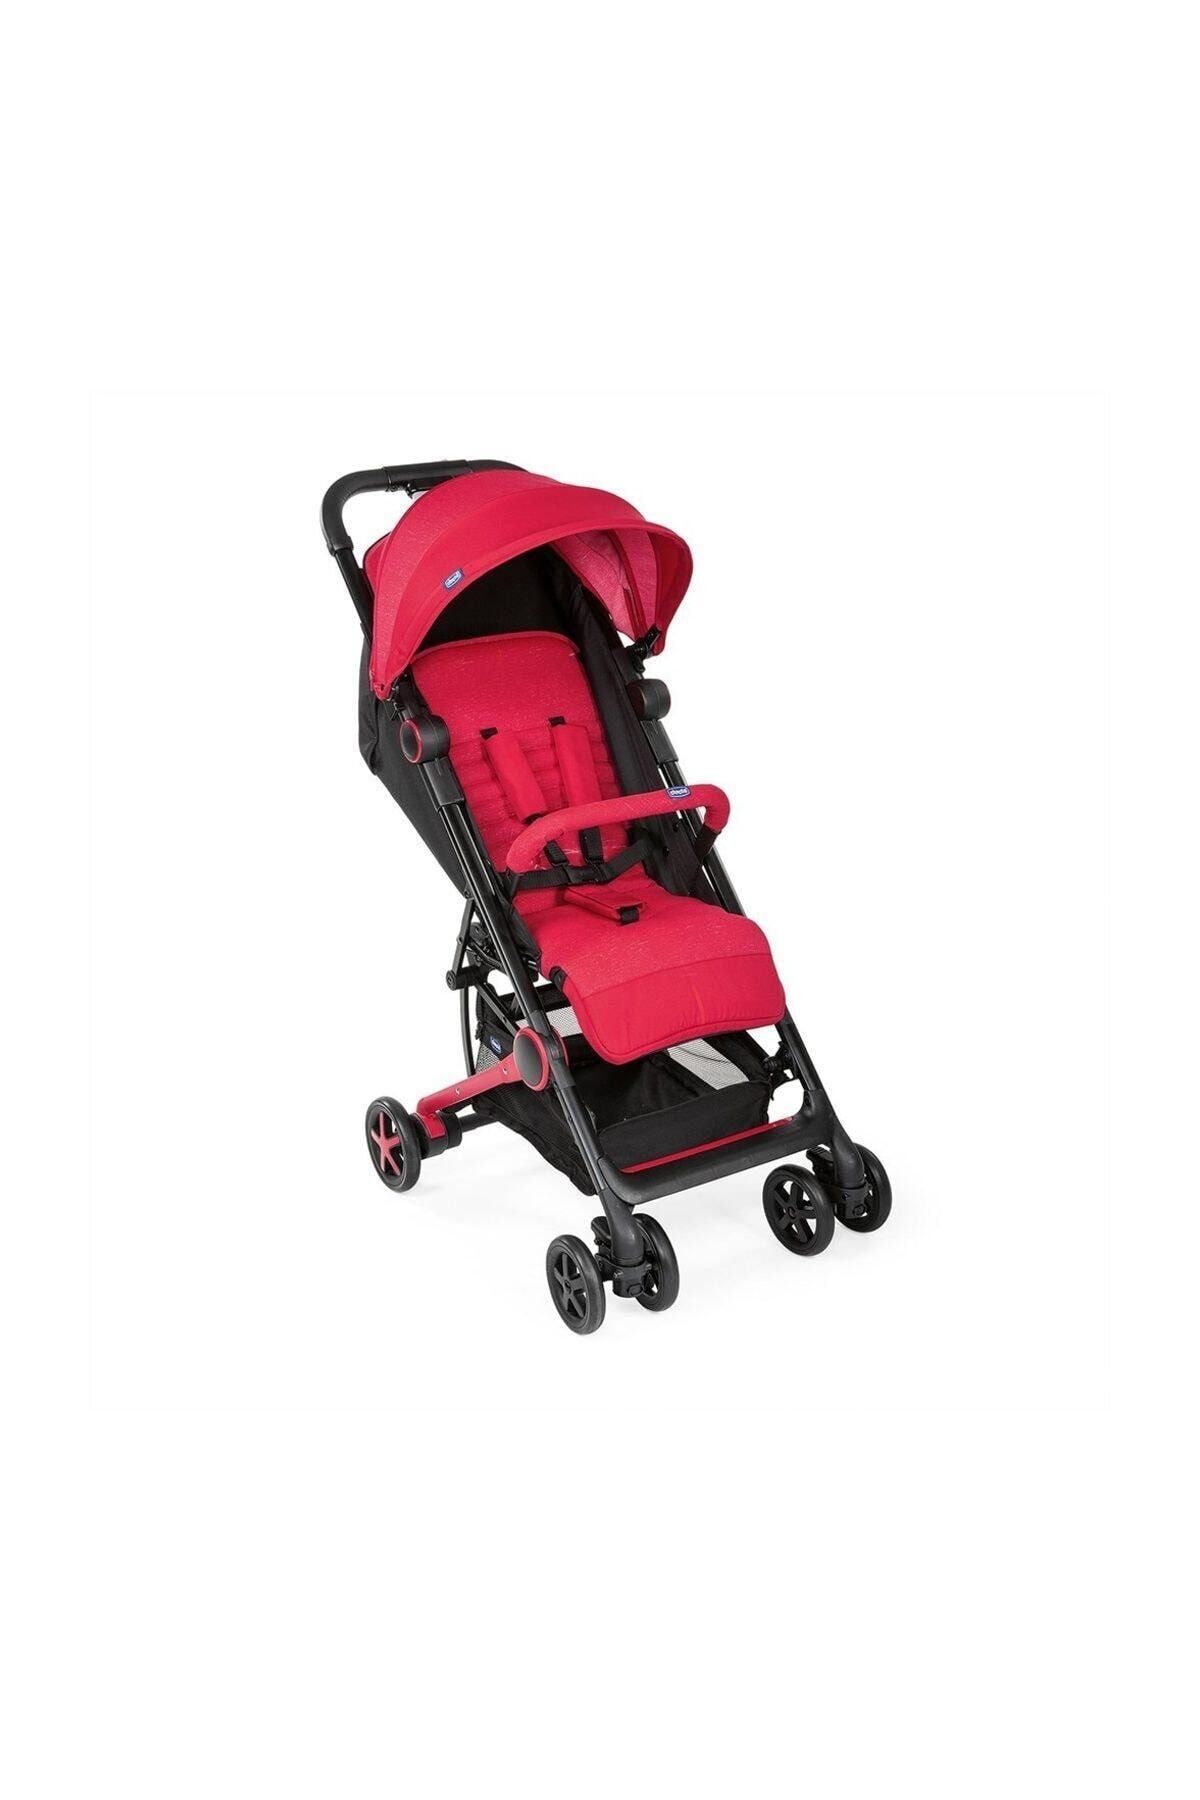 Chicco Miinimo3 Ultra Kompakt Bebek Arabası Red Passion